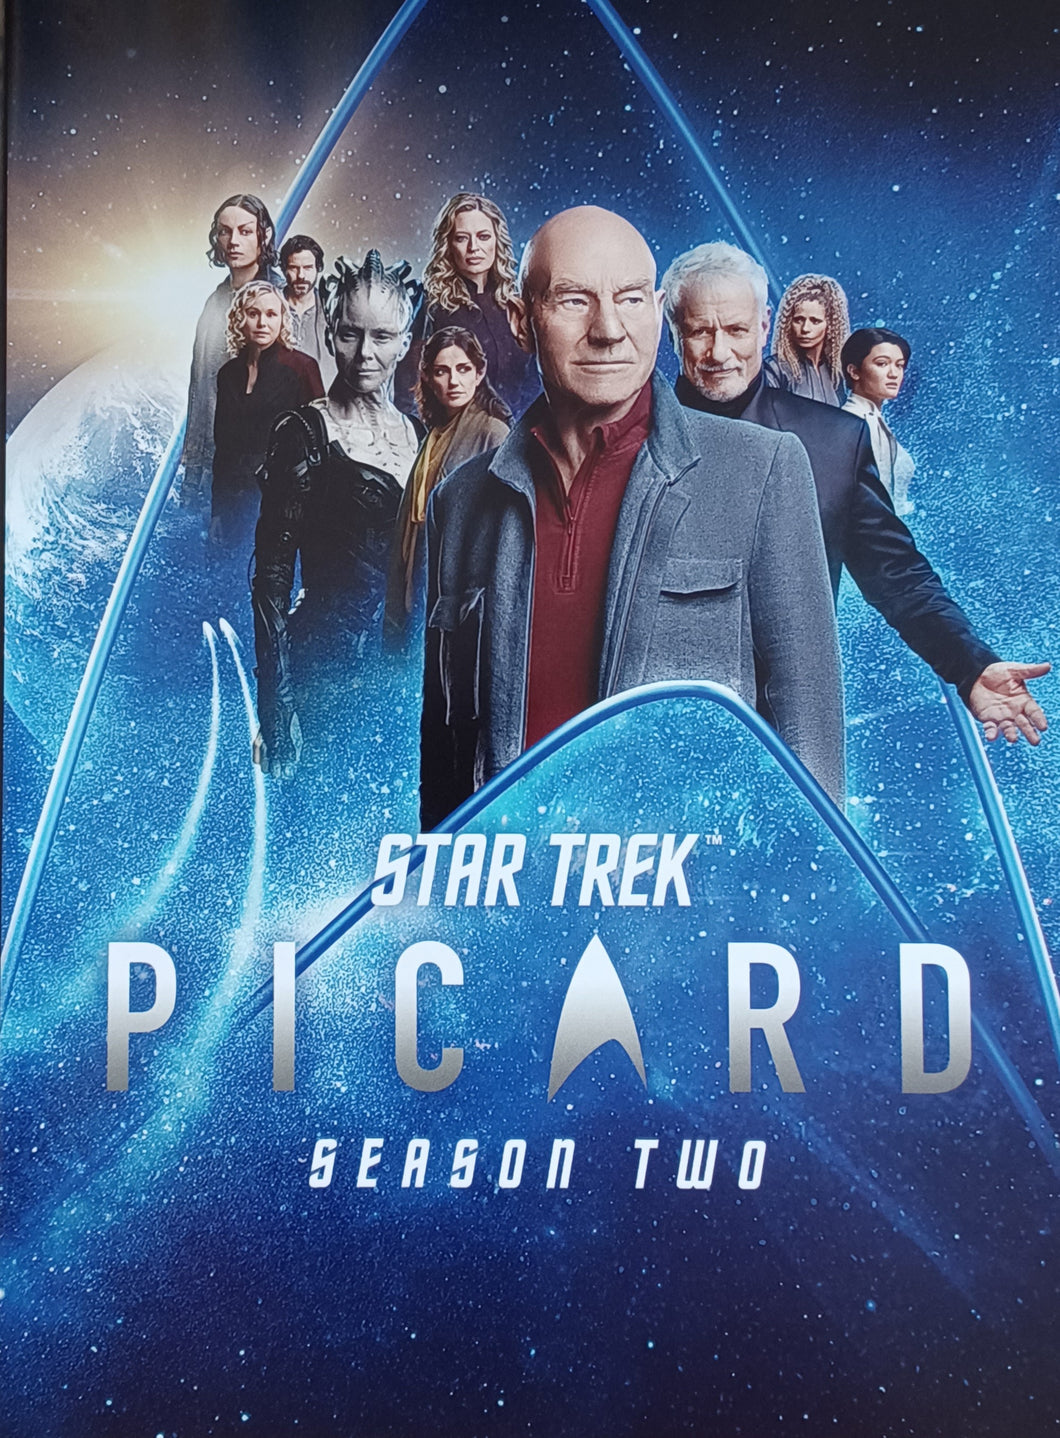 Picard: Season 2